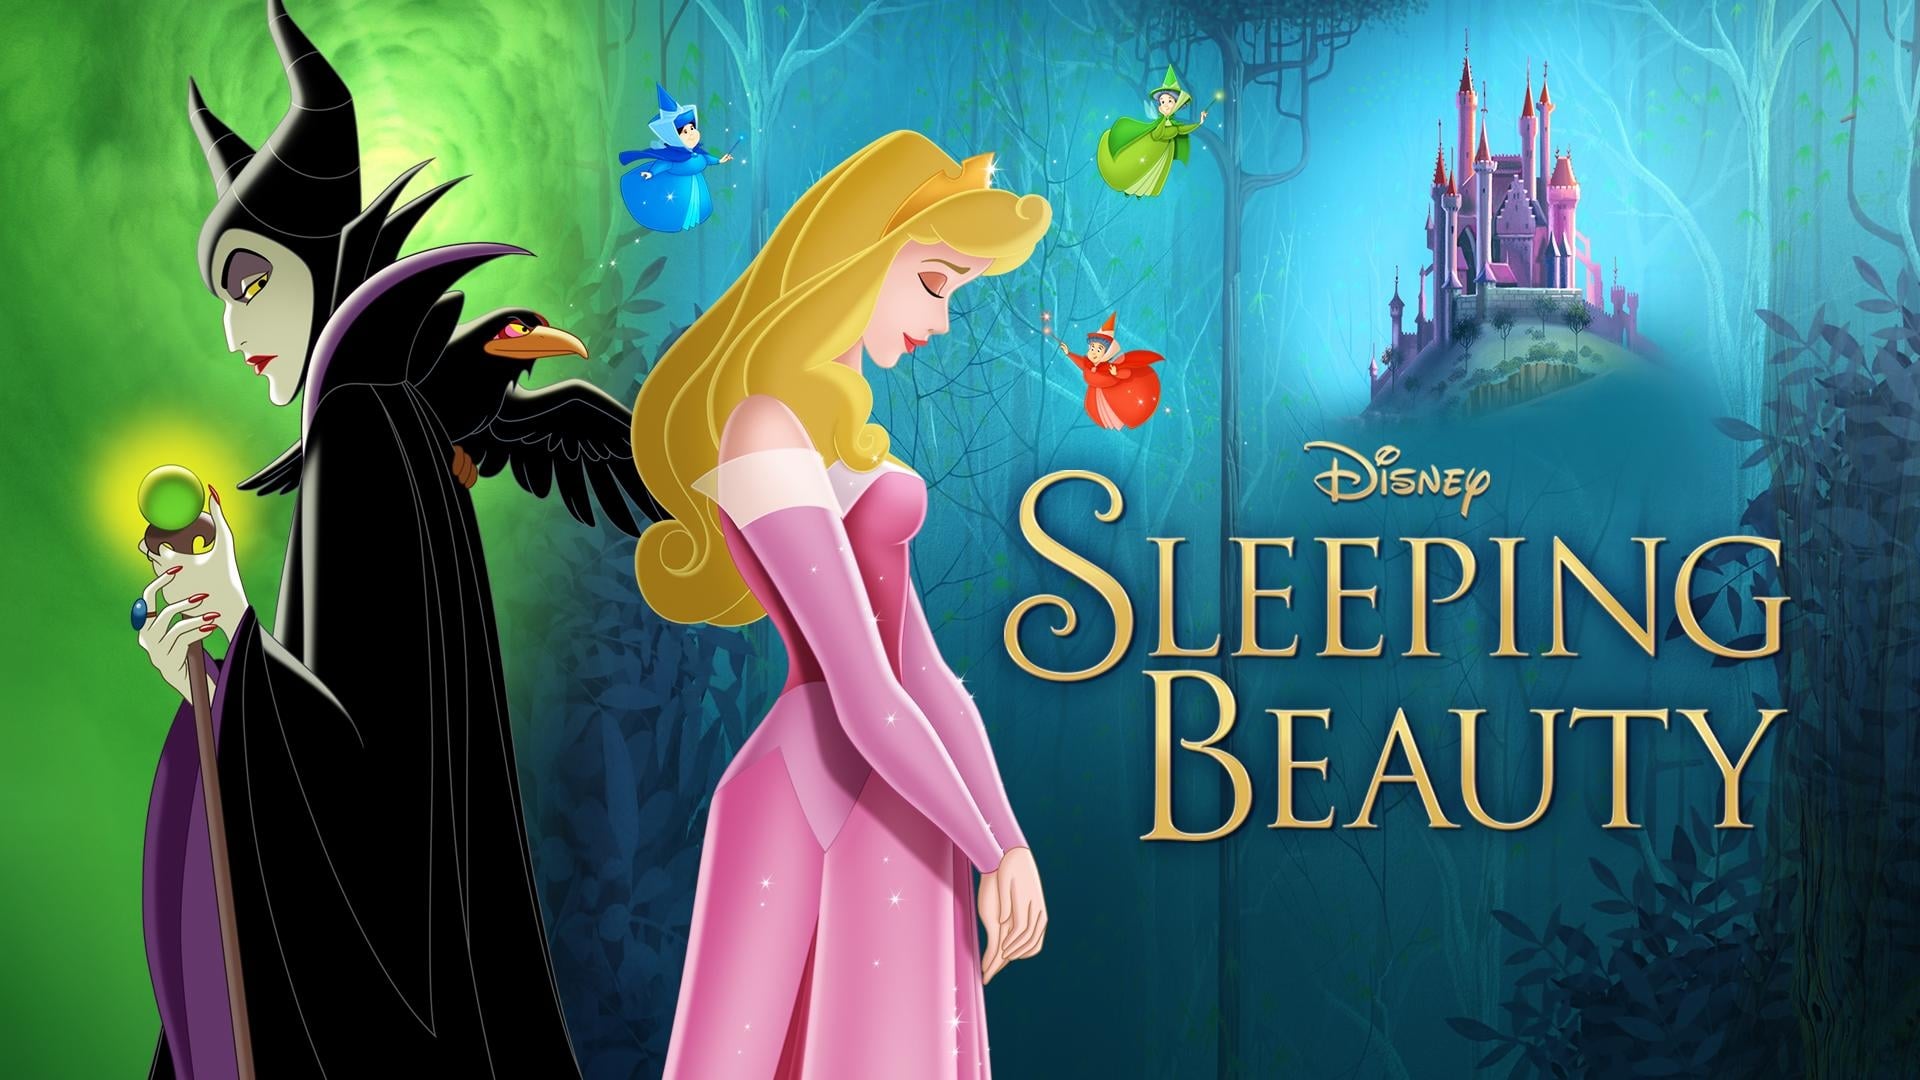 Photomural Sleeping Beauty from Disney | photomural.com